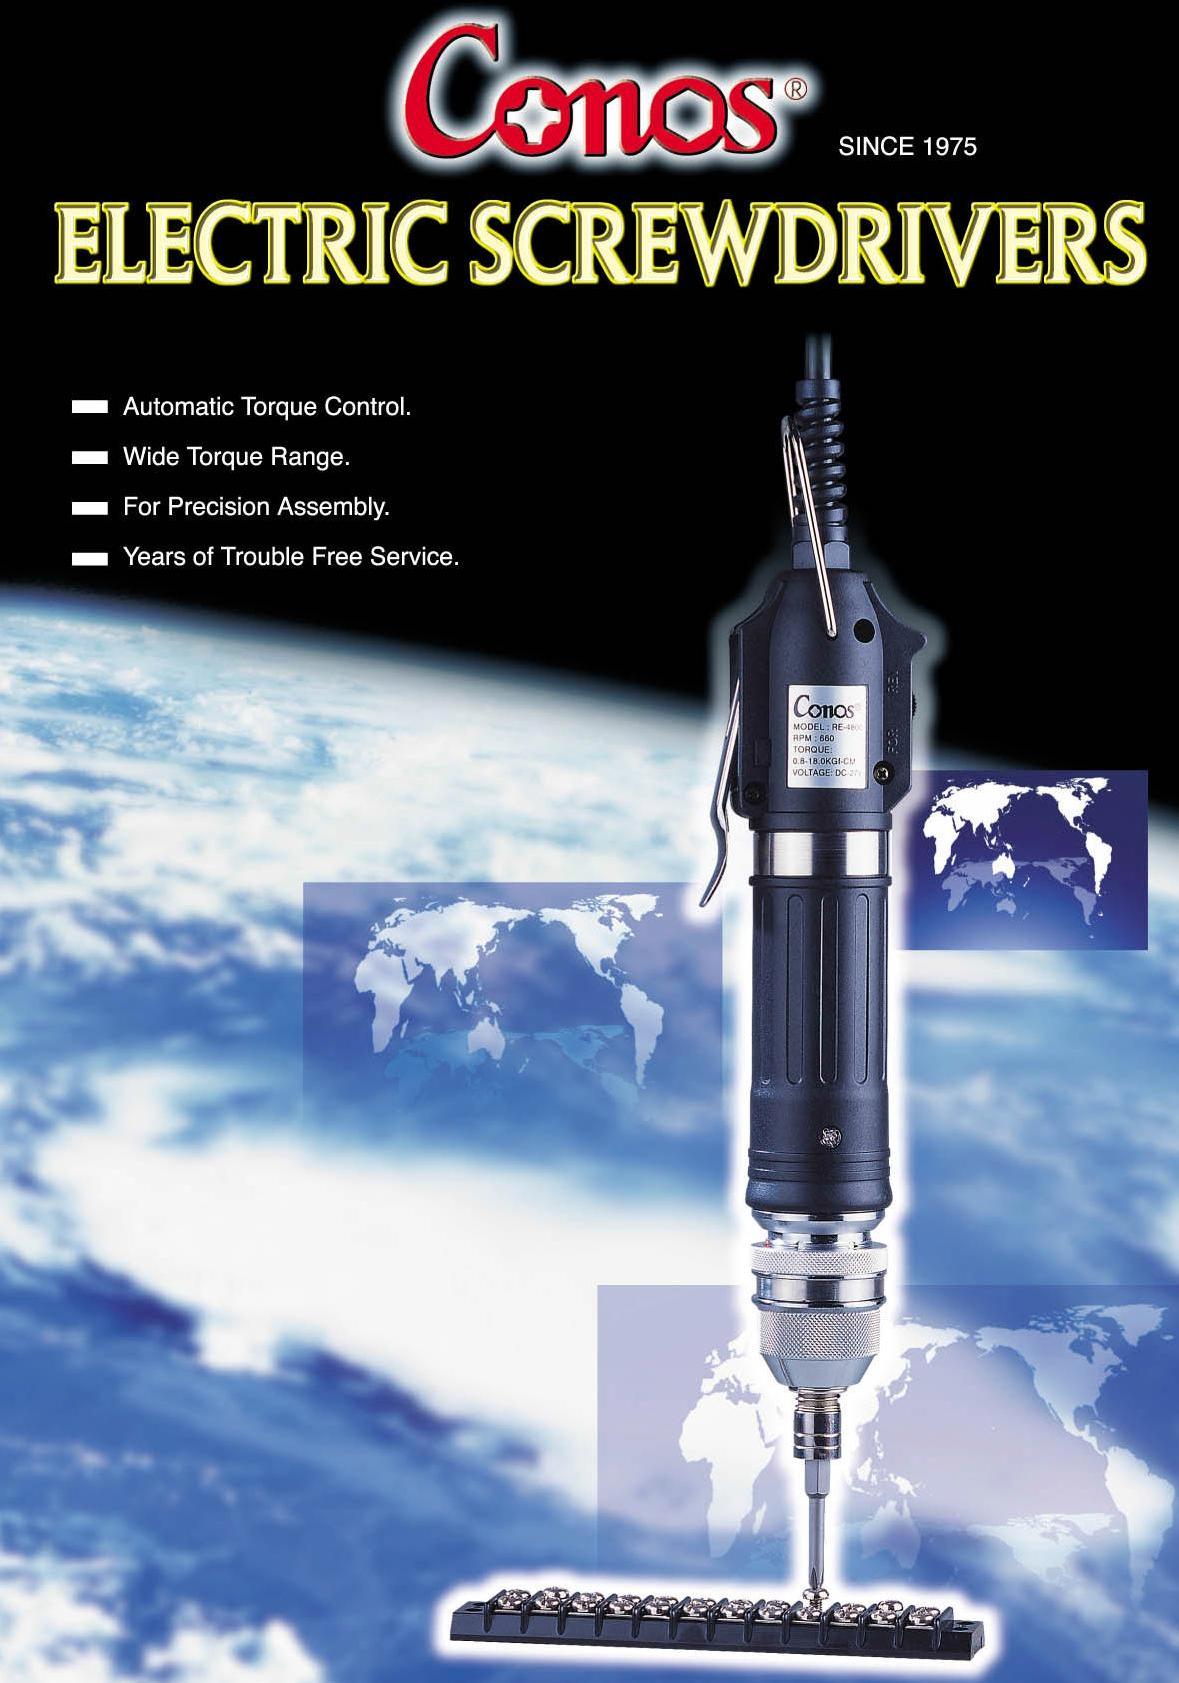 Electric Screwdrivers